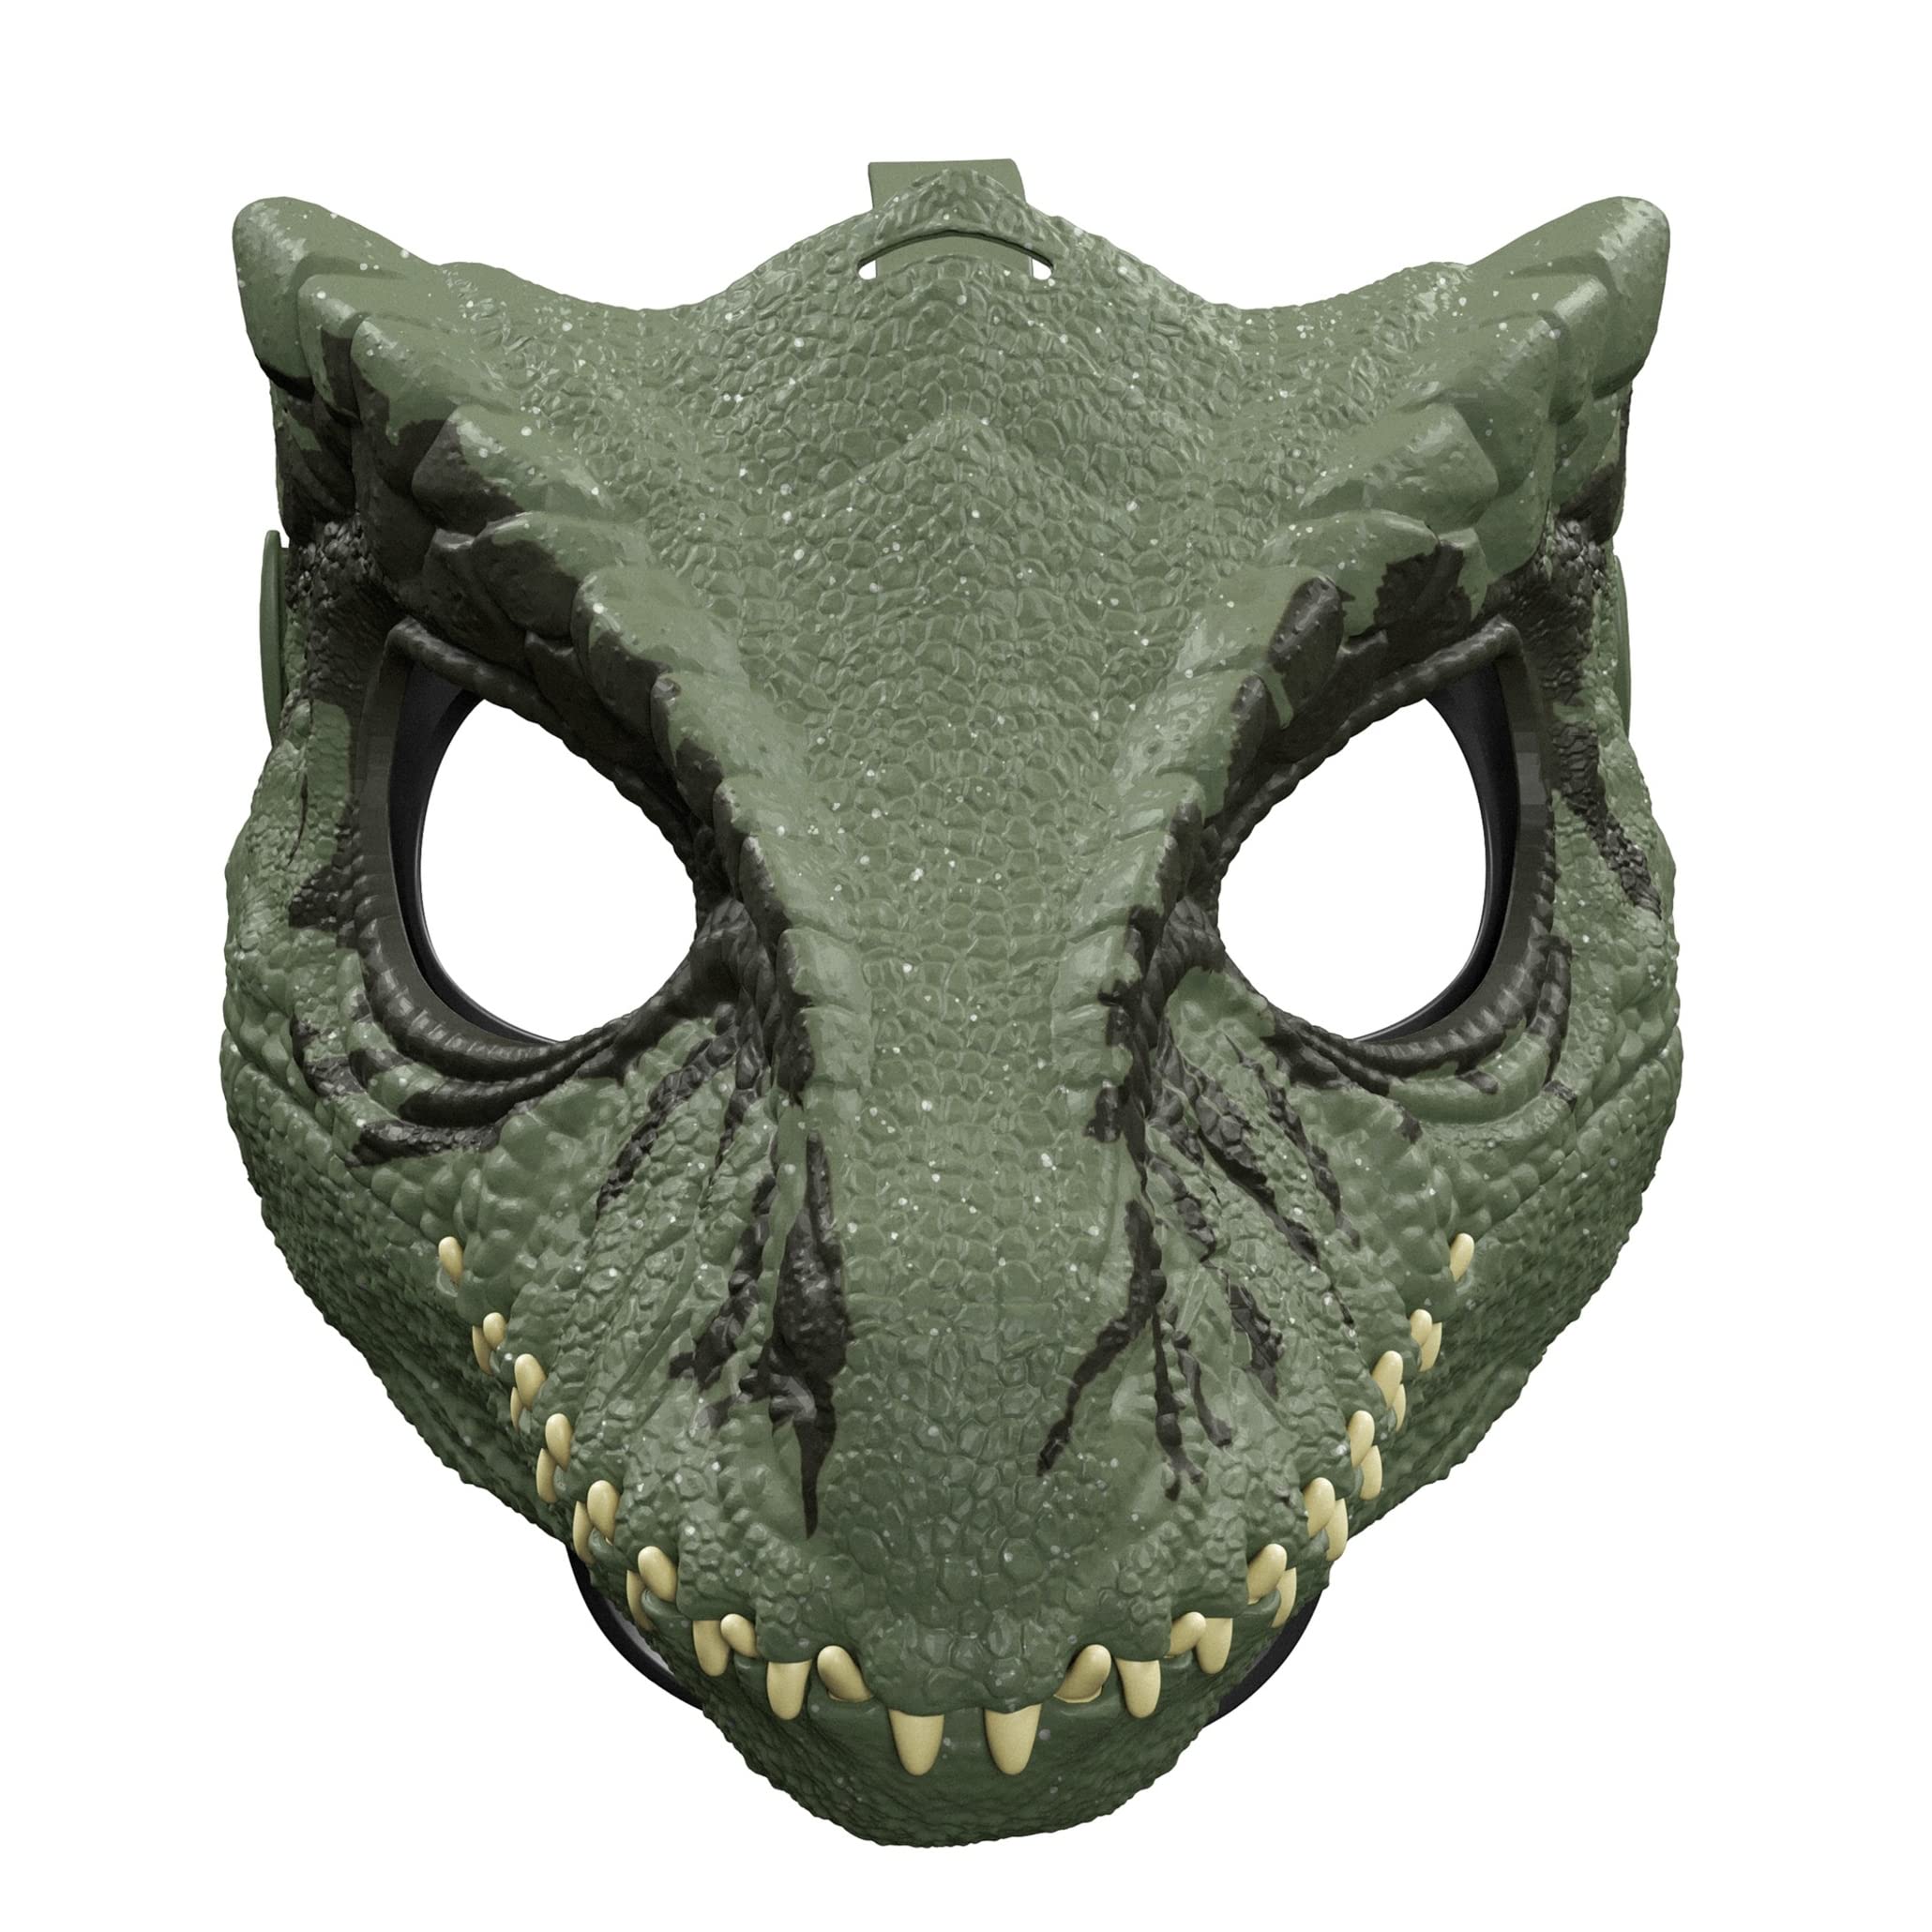 Mattel Jurassic World Toys Dominion Giganotosaurus Dinosaur Mask, Movie-Inspired Role Play Toy with Opening Jaw & Realistic Design